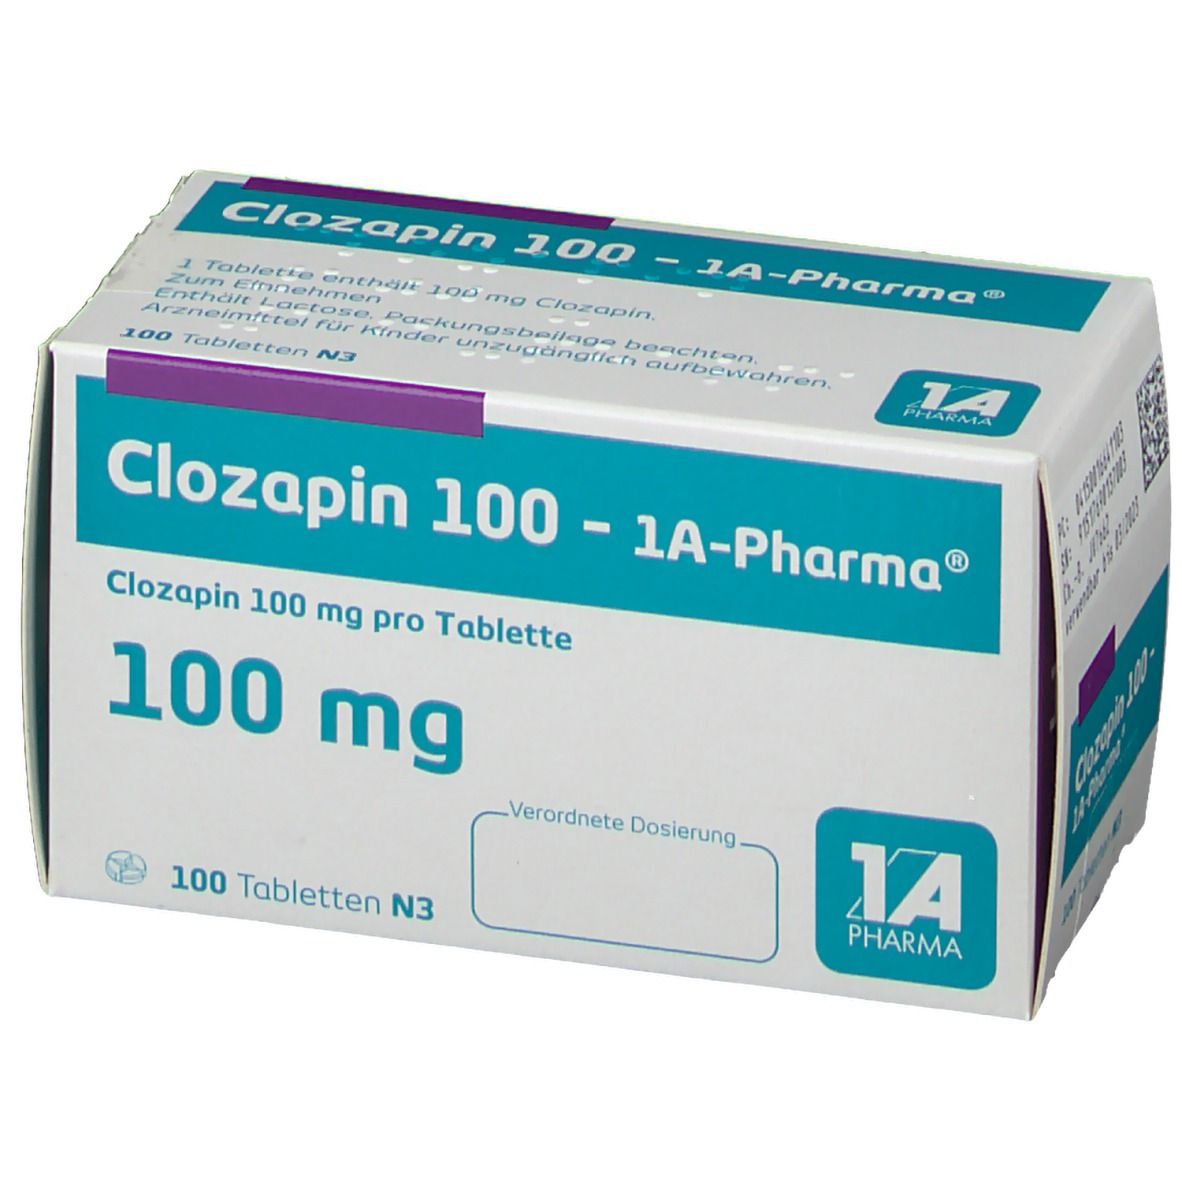 Clozapin 100 1A Pharma®